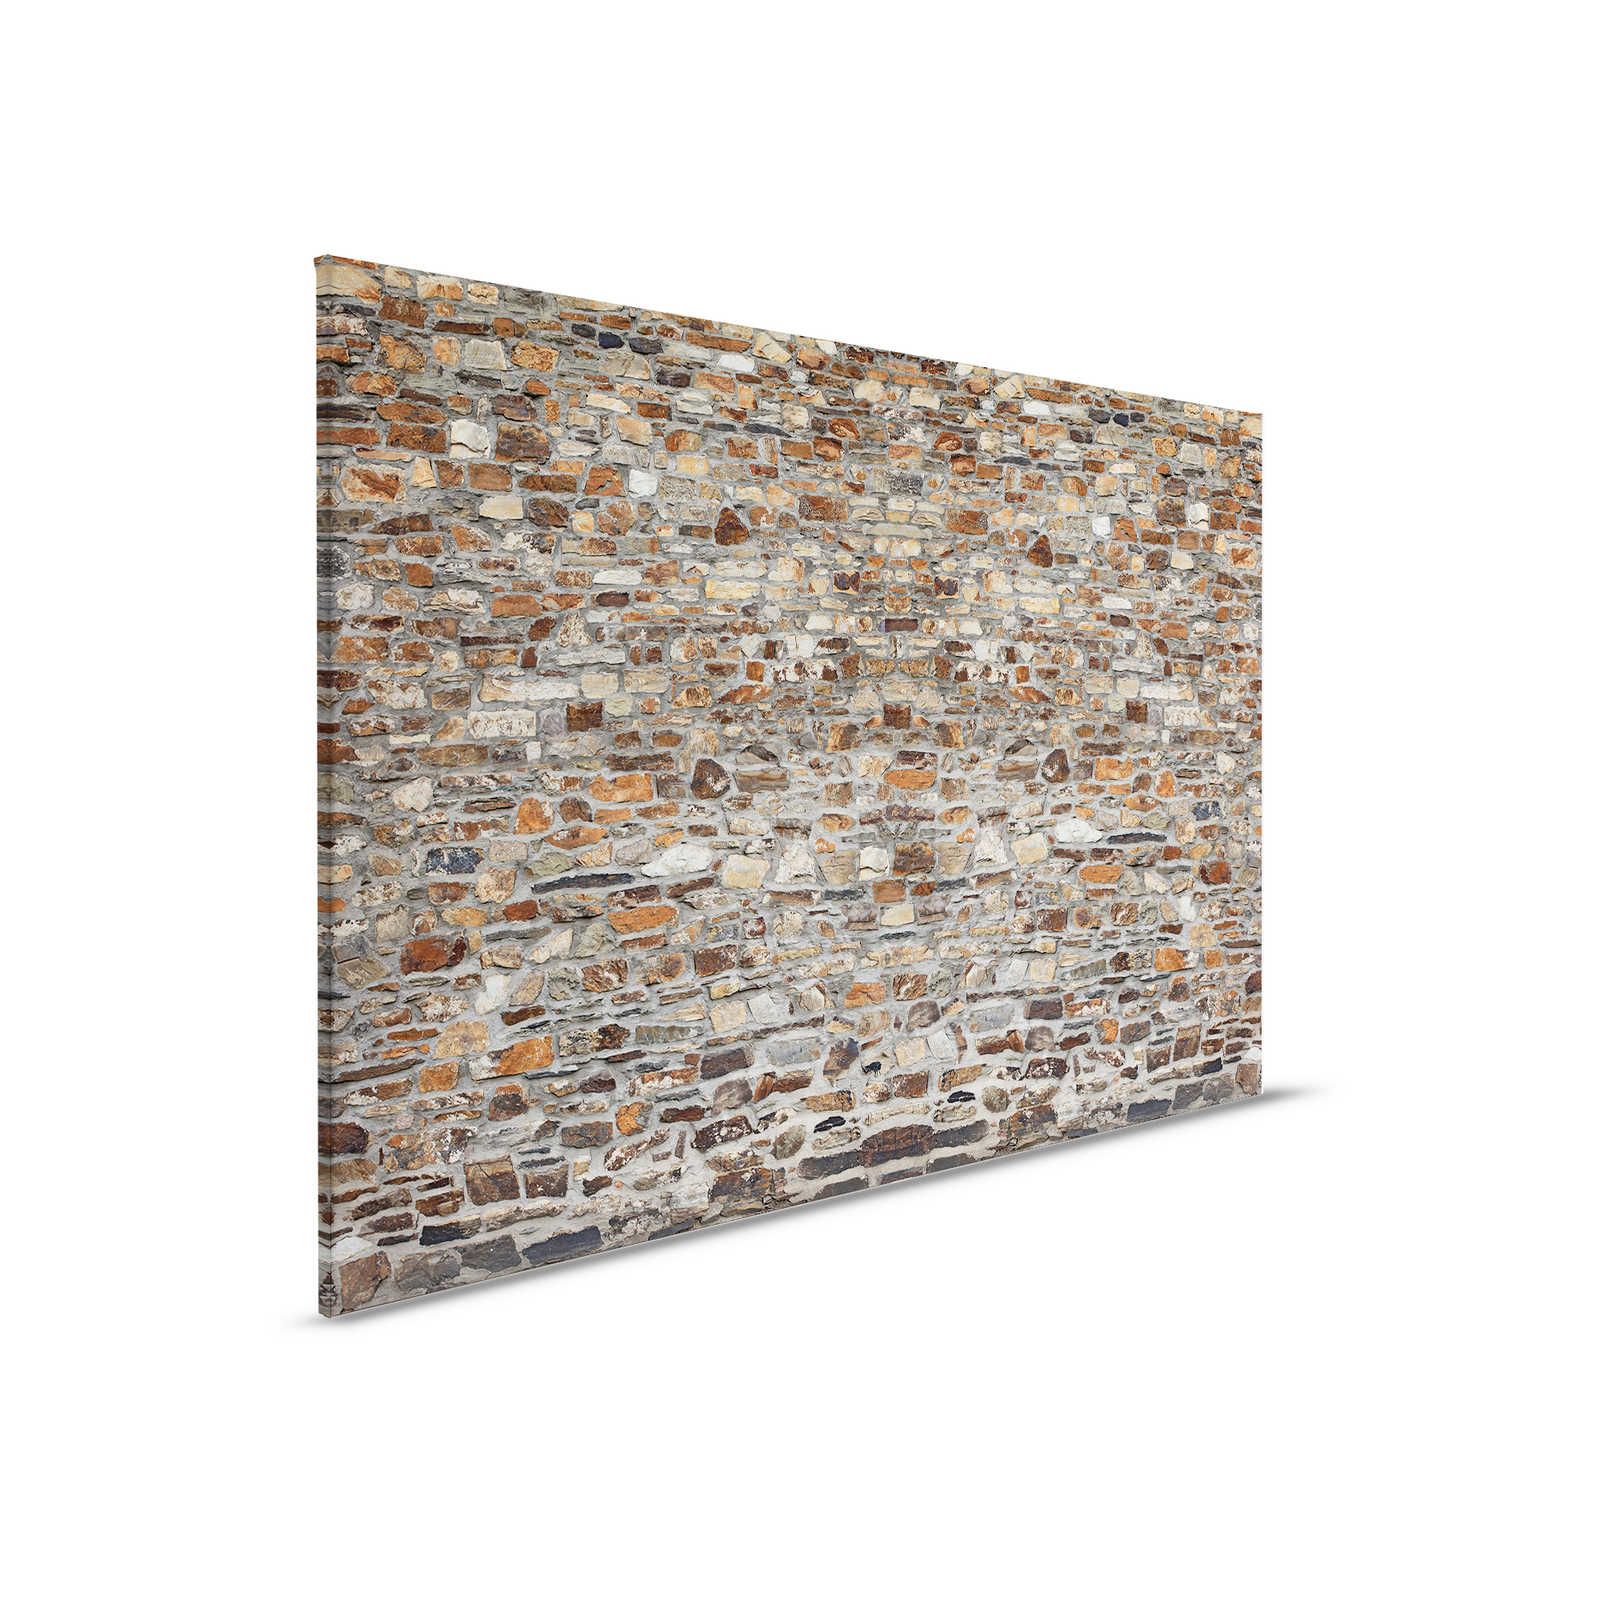 Leinwandbild 3D Mauer alte Ziegel & rustikaler Steinoptik – 0,90 m x 0,60 m
